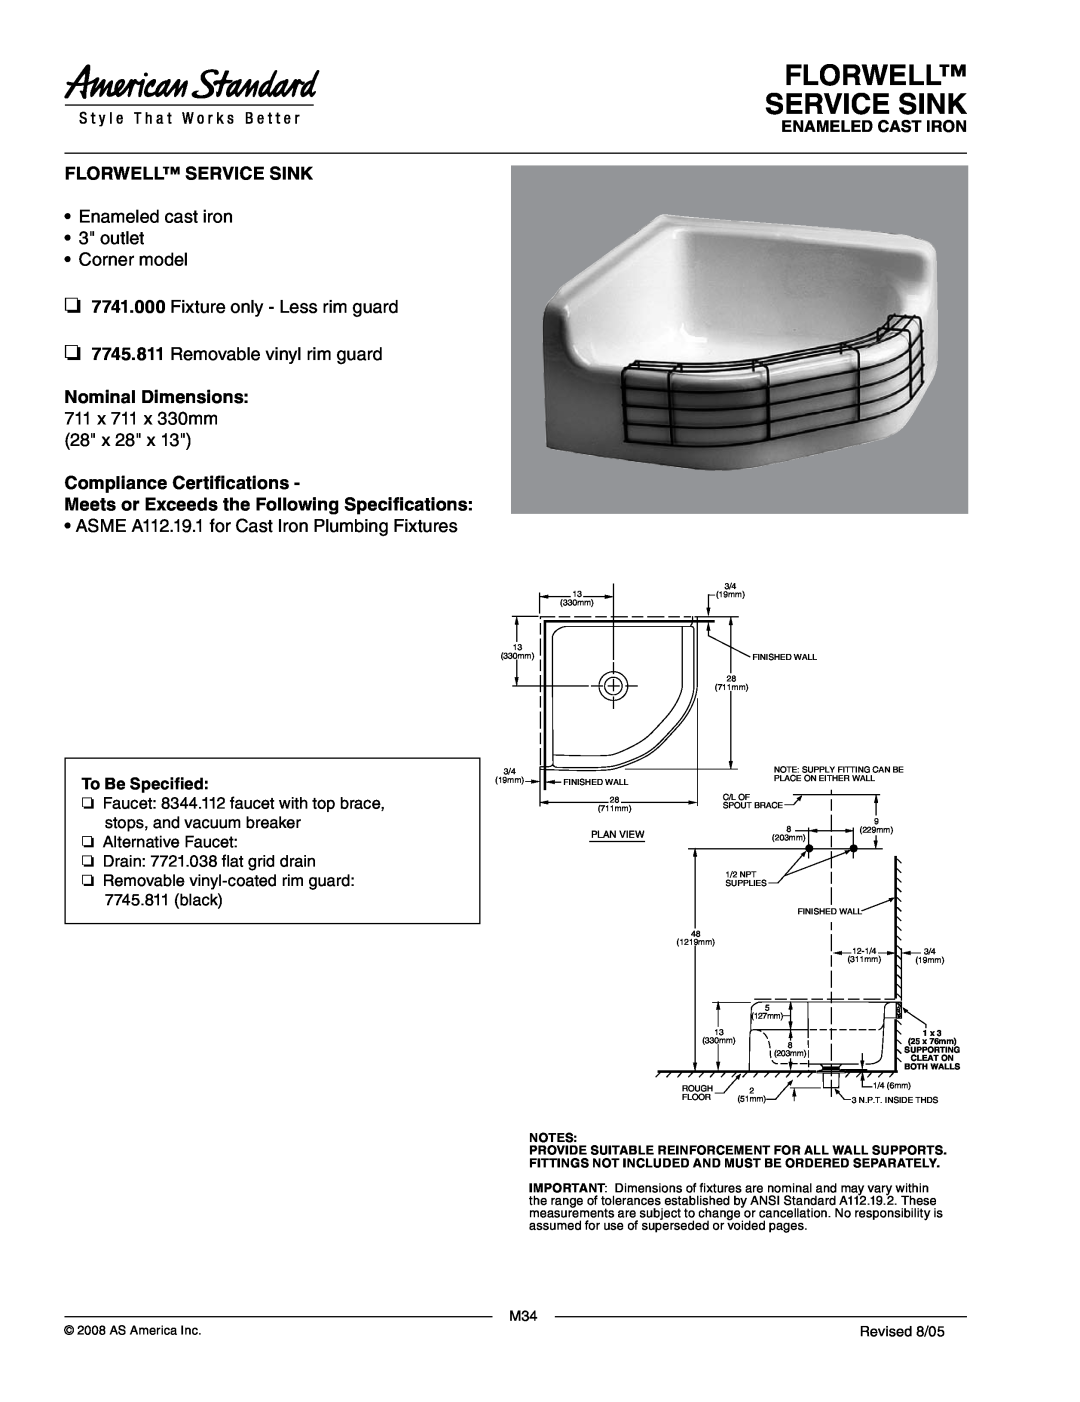 American Standard 7741.000 dimensions Florwell Service Sink, Enameled cast iron 3 outlet Corner model, Enameled Cast Iron 